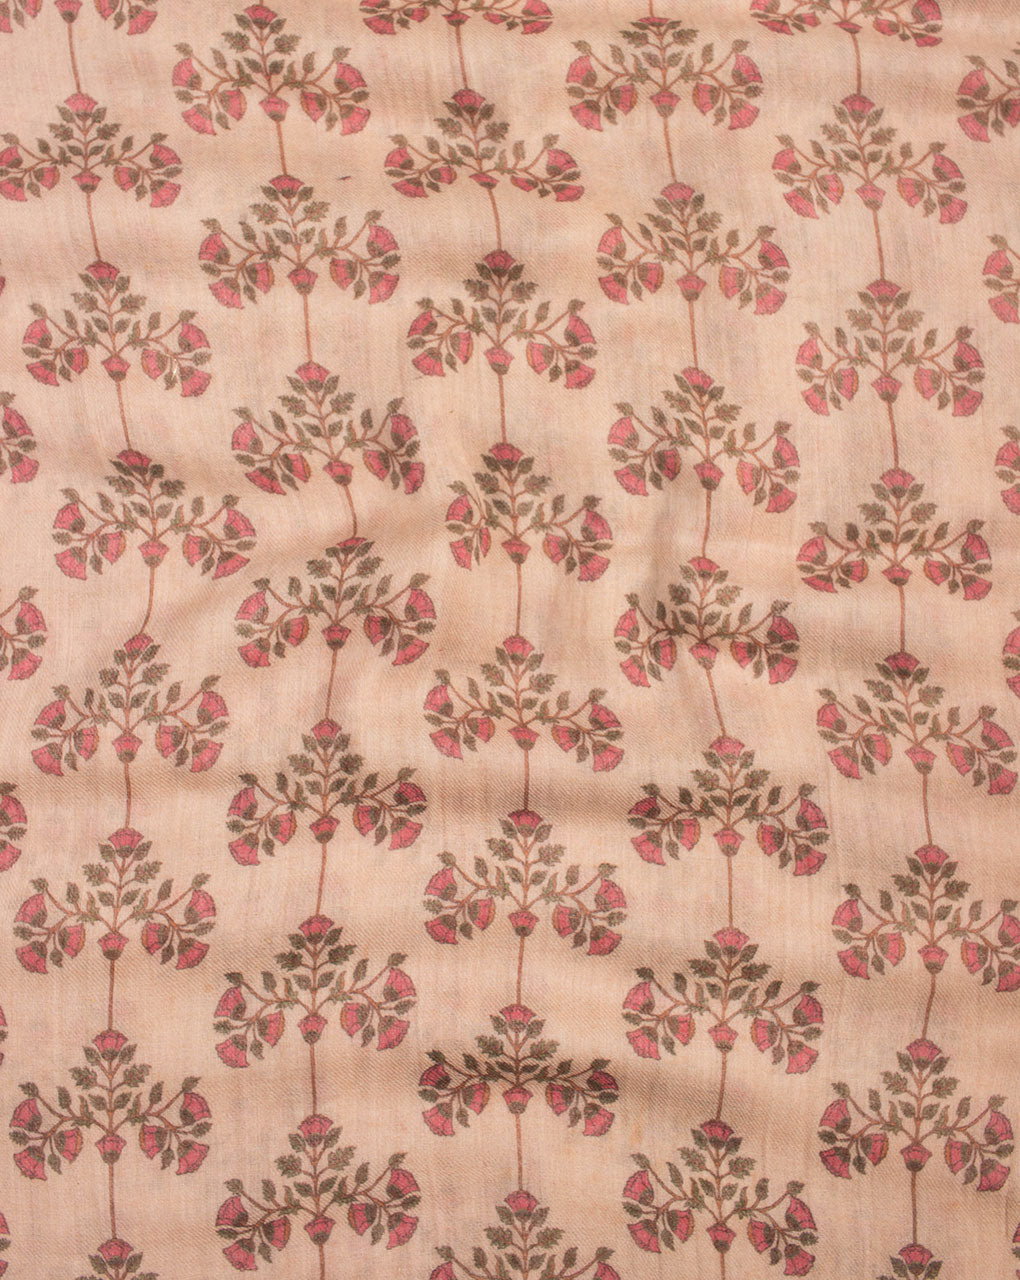 Digital Print Wool Silk Fabric - Fabriclore.com